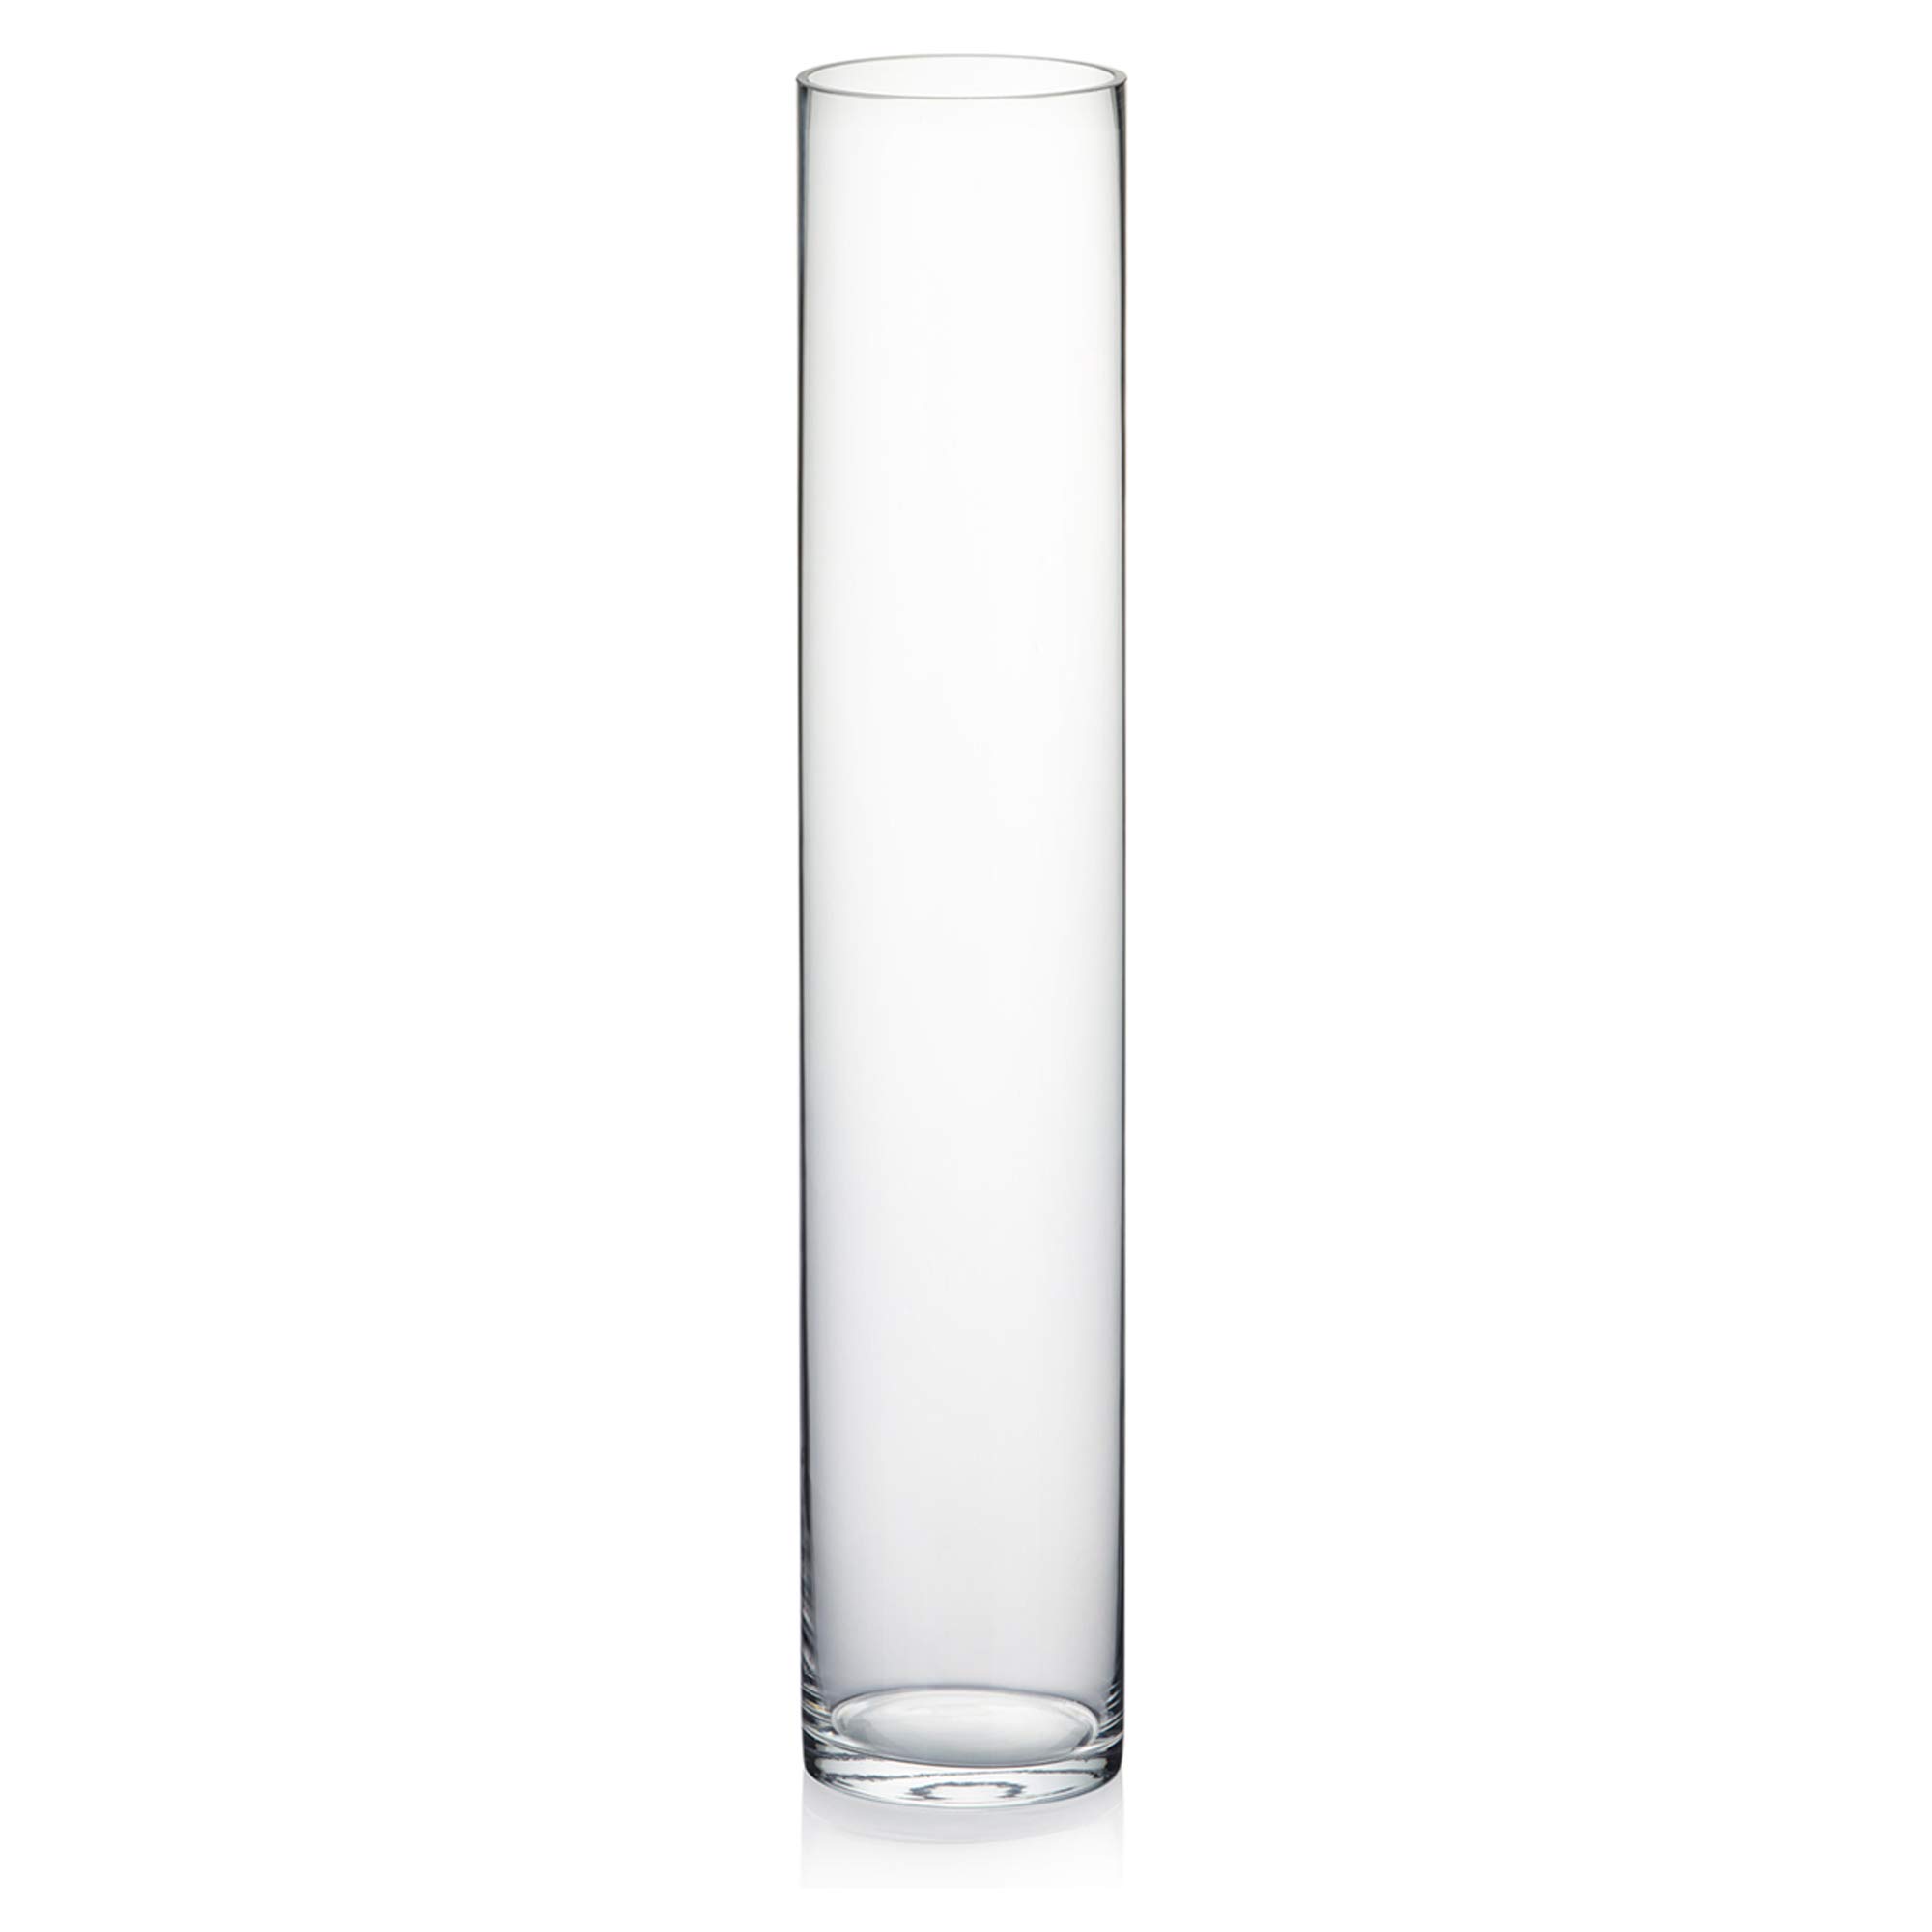 Tall Cylinder Glass Flower Vase Clear Candle Holder Plantter Terrarium Home Decor